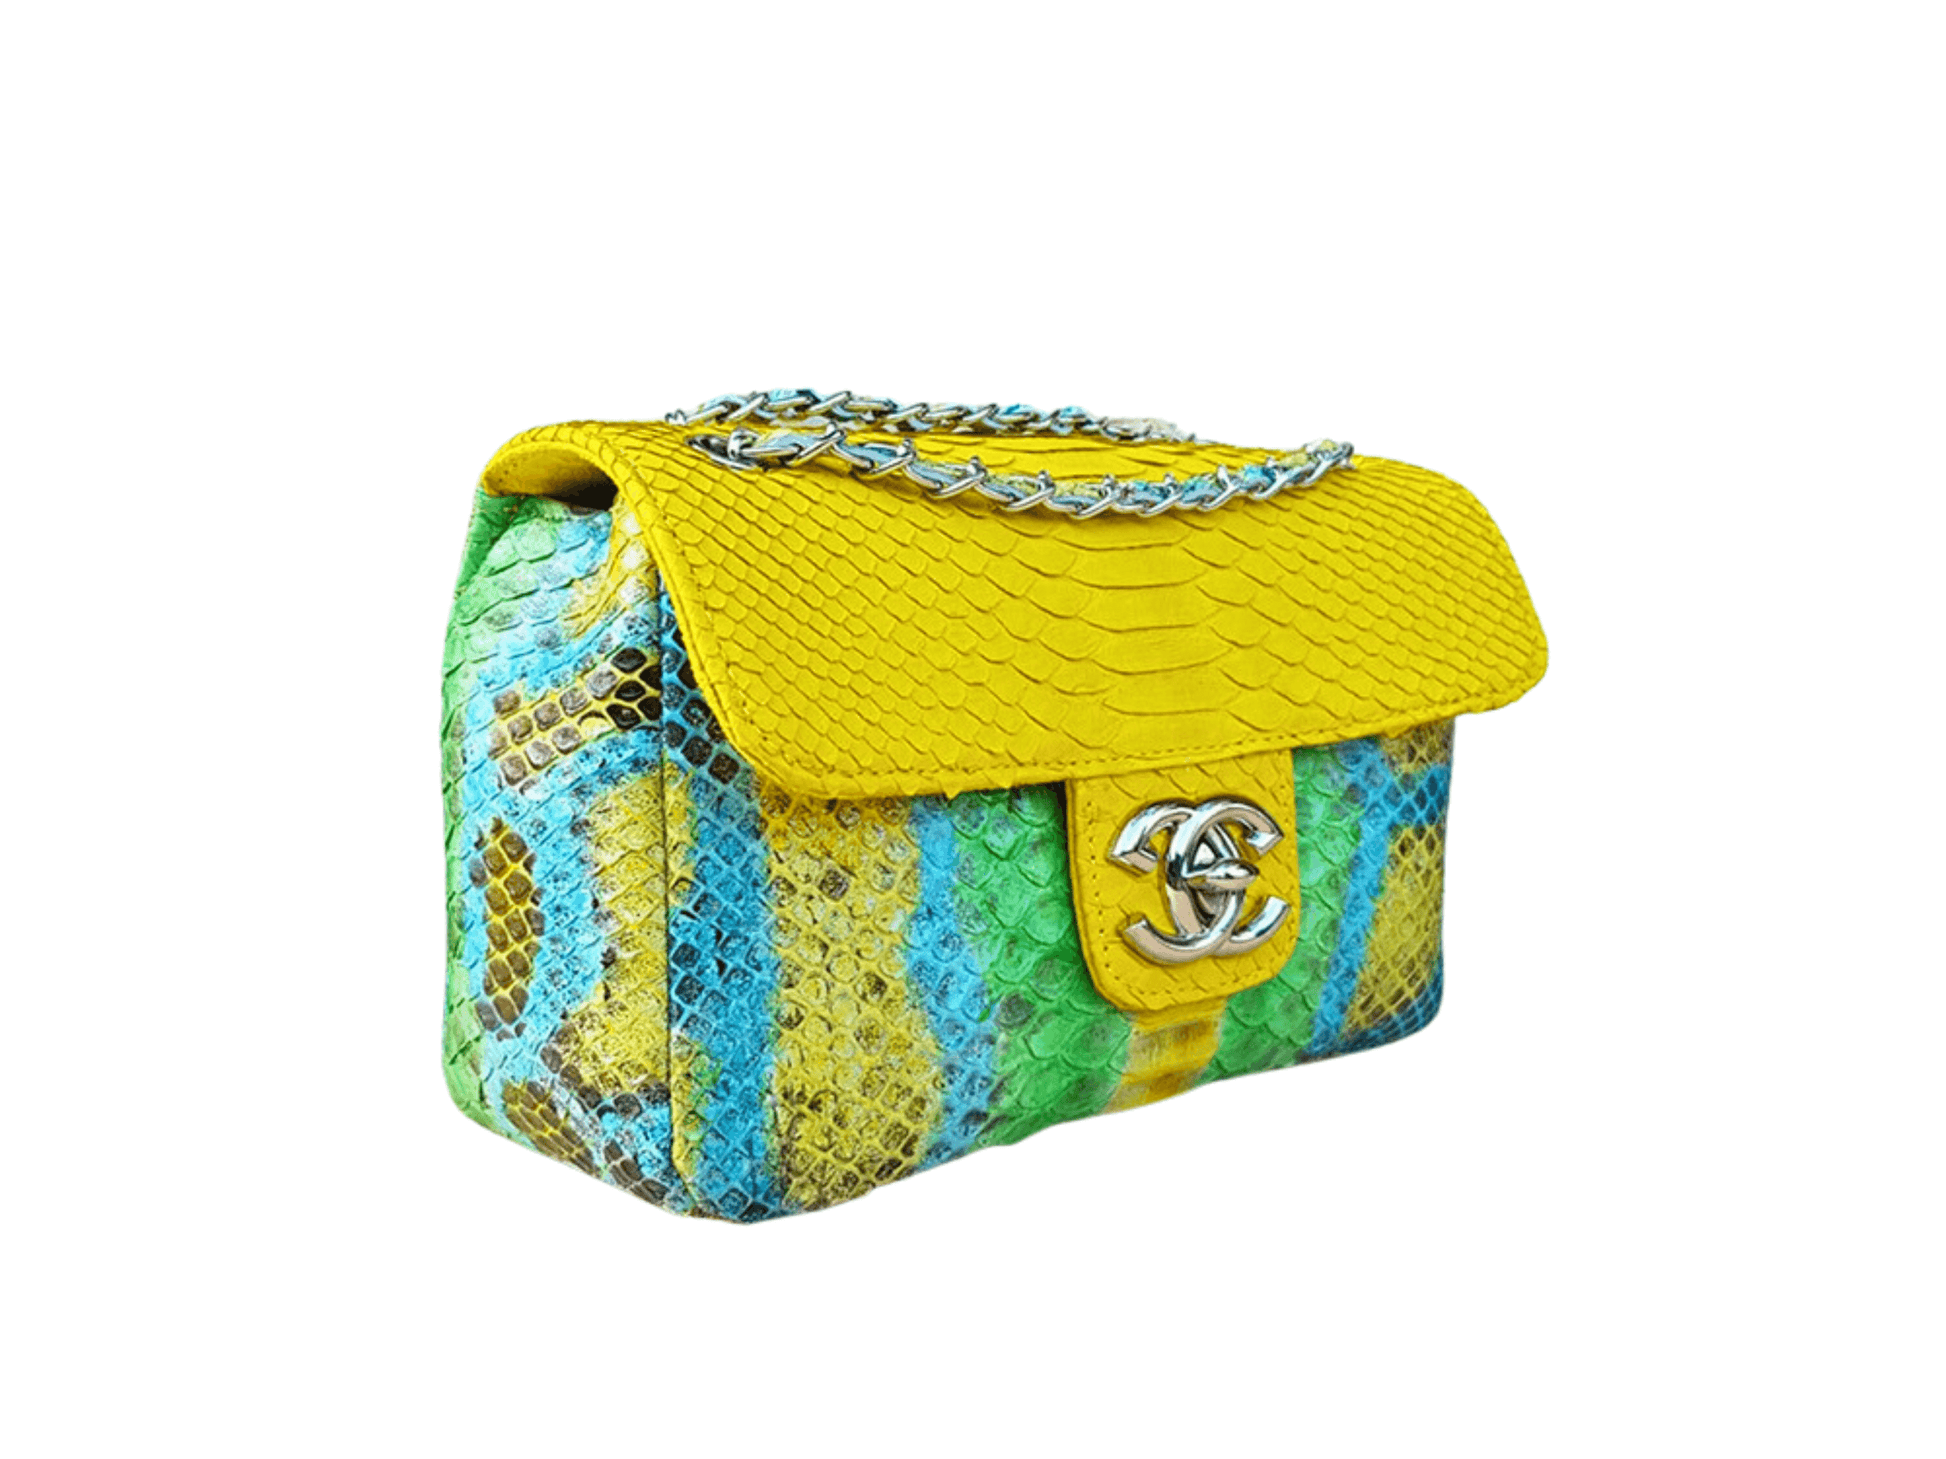 Chanel Small Flap Snakeskin Shoulder Bag Yellow Python Jacket by LFM Fashion